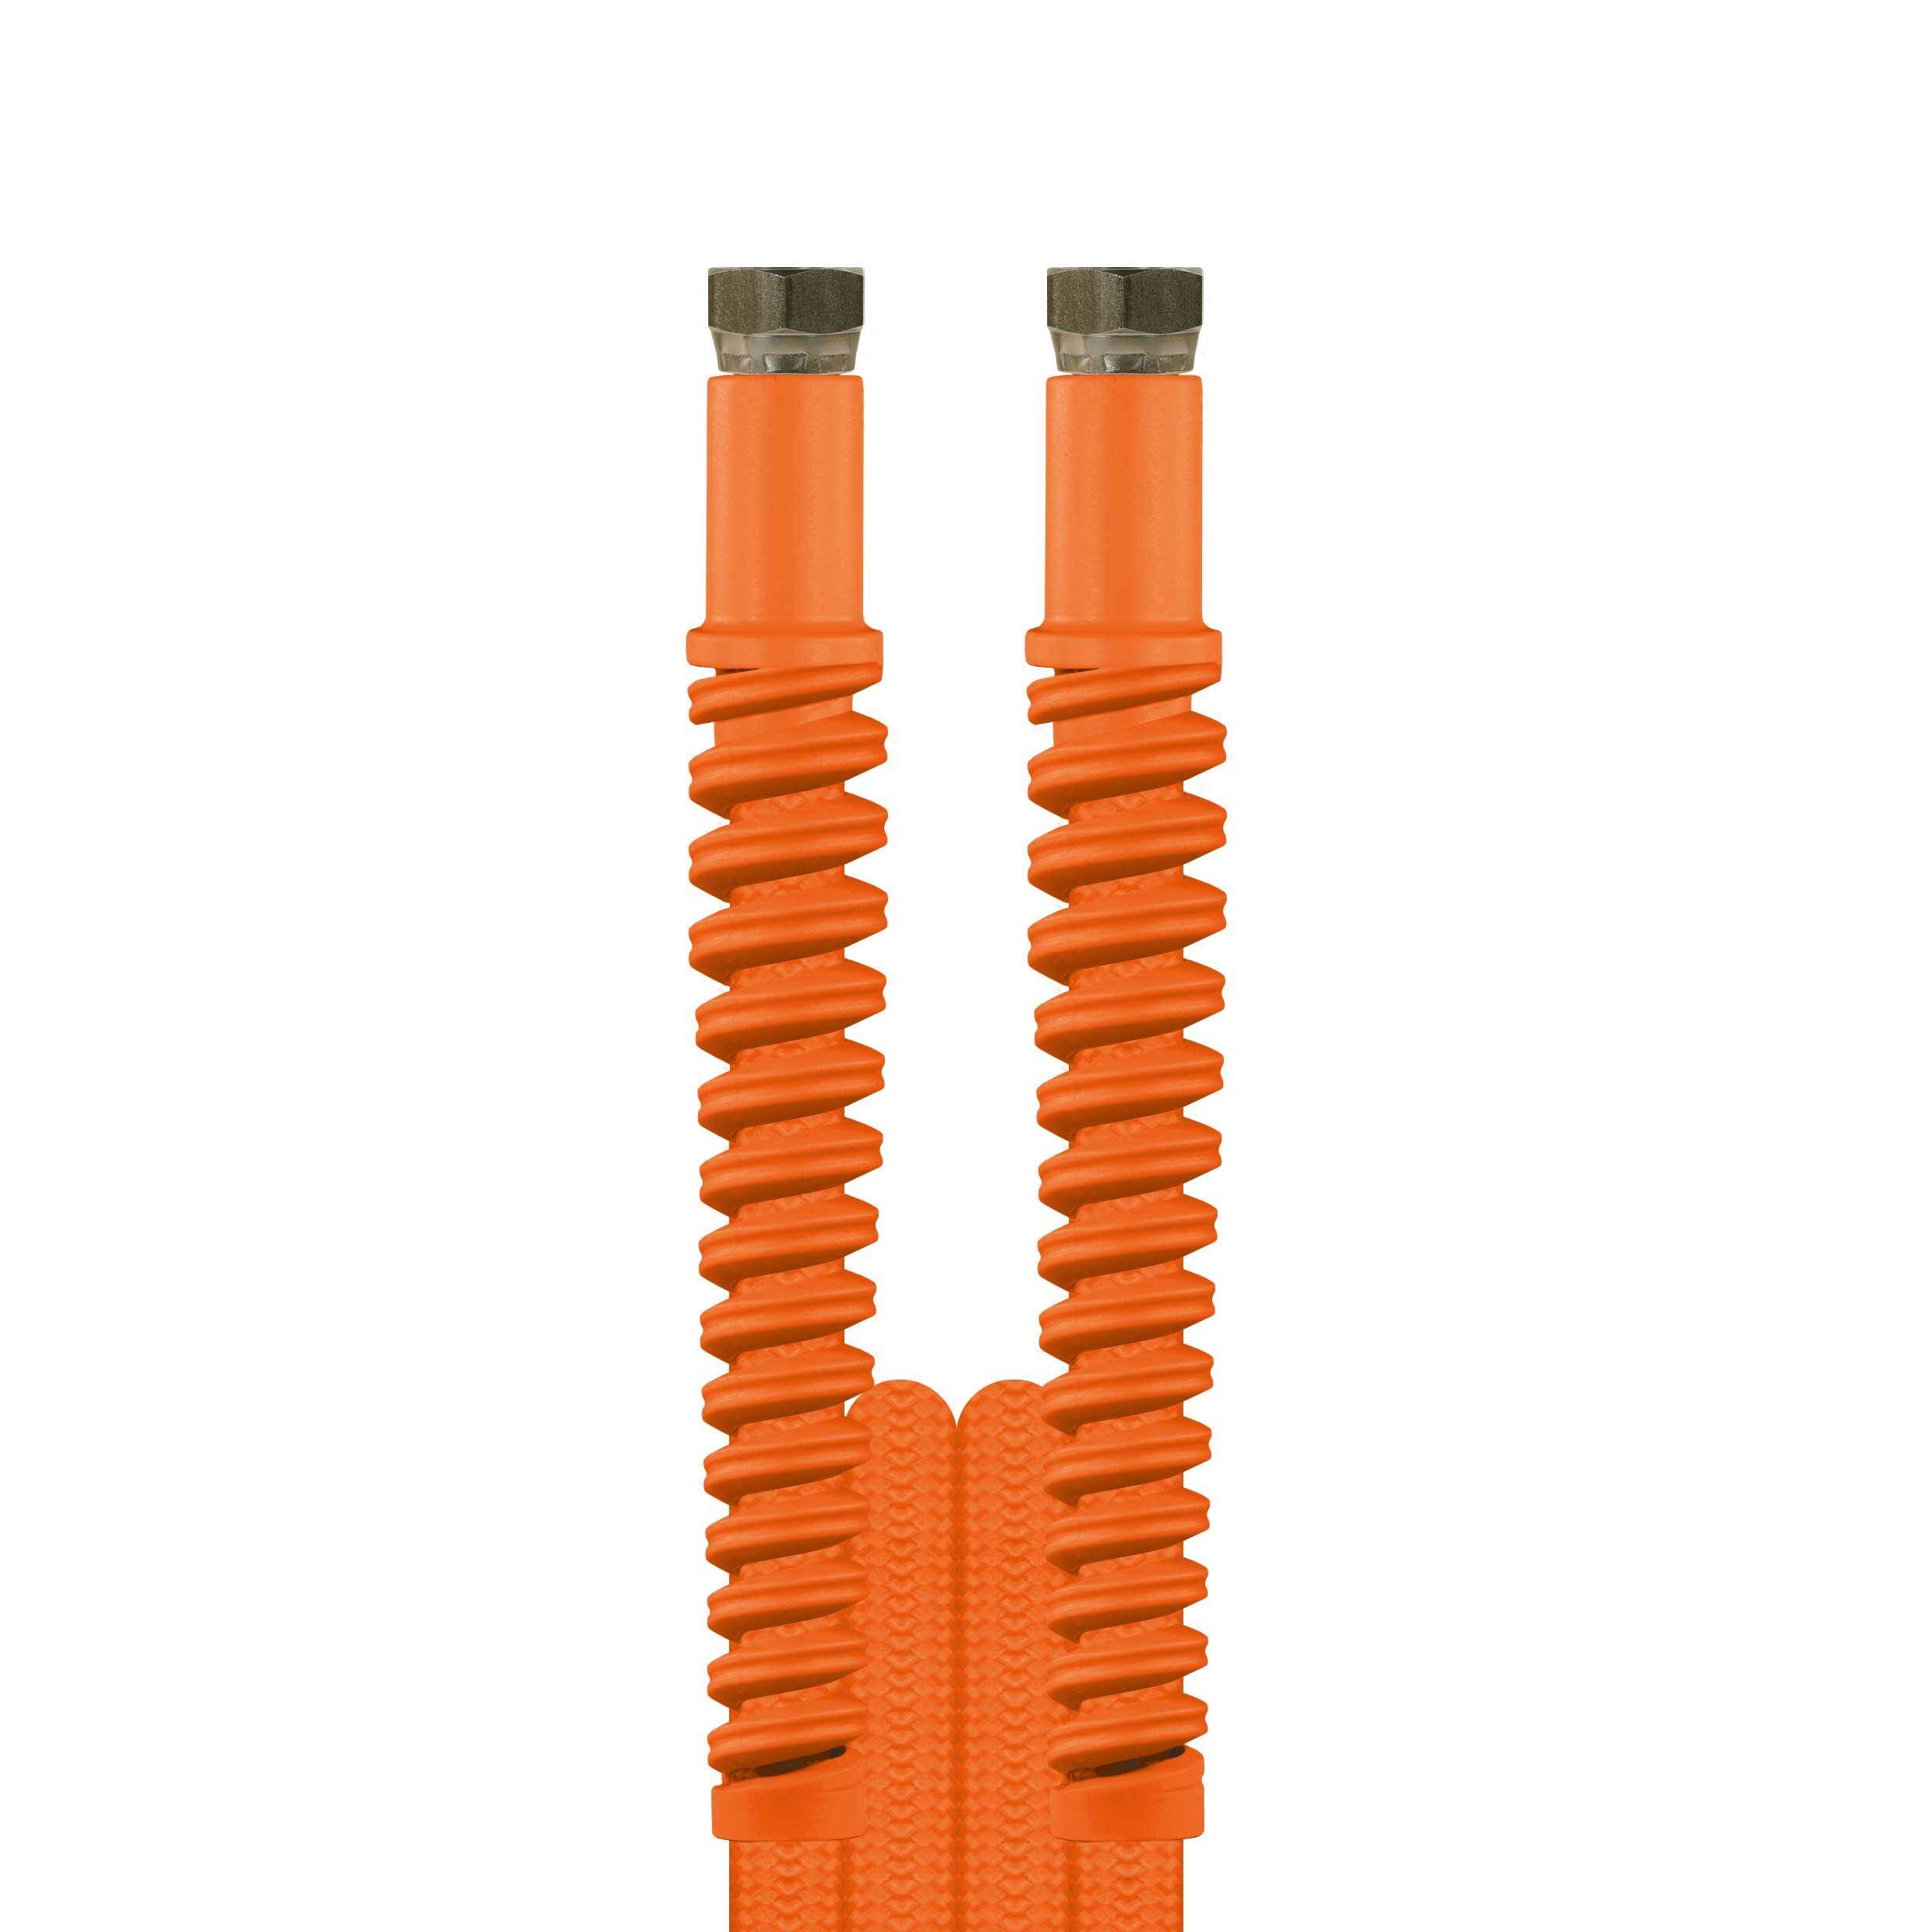 Wąż CARWASH-COMFORT orange 4,5 mb okuty